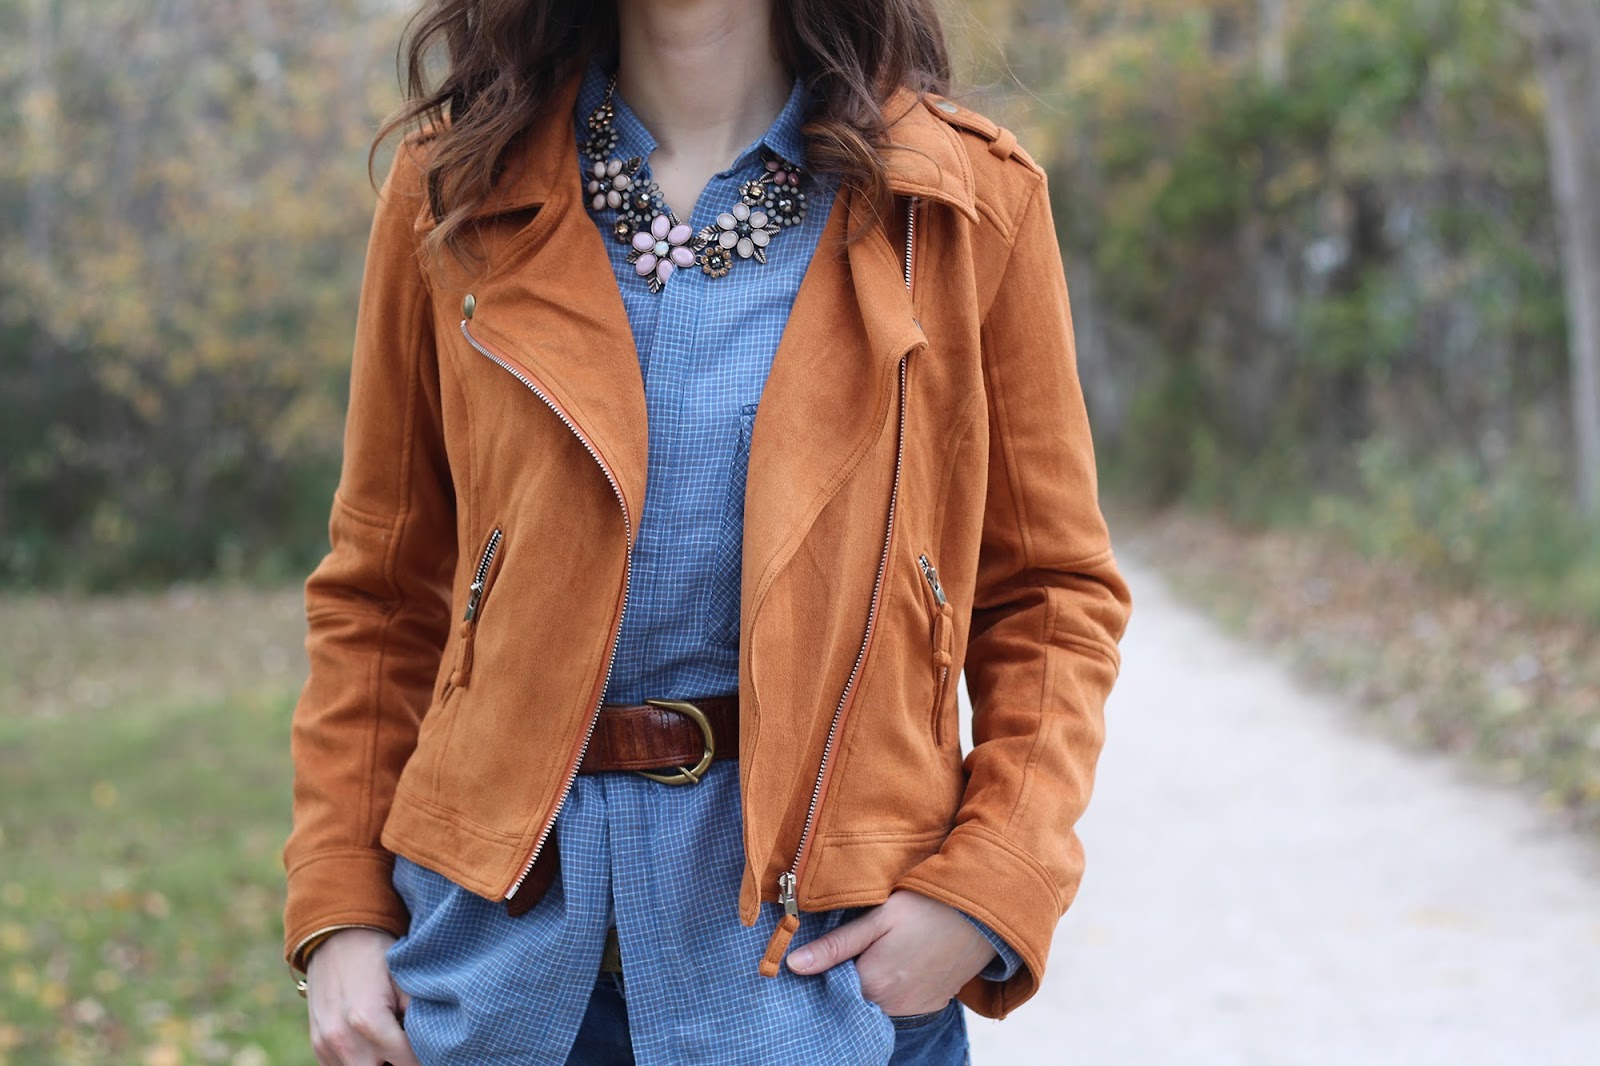 fashion blogger girl pescara italy indie style romwe jacket braccialini bag minnetonka boots denim vintage bijou brigitte bijoux il centimetro